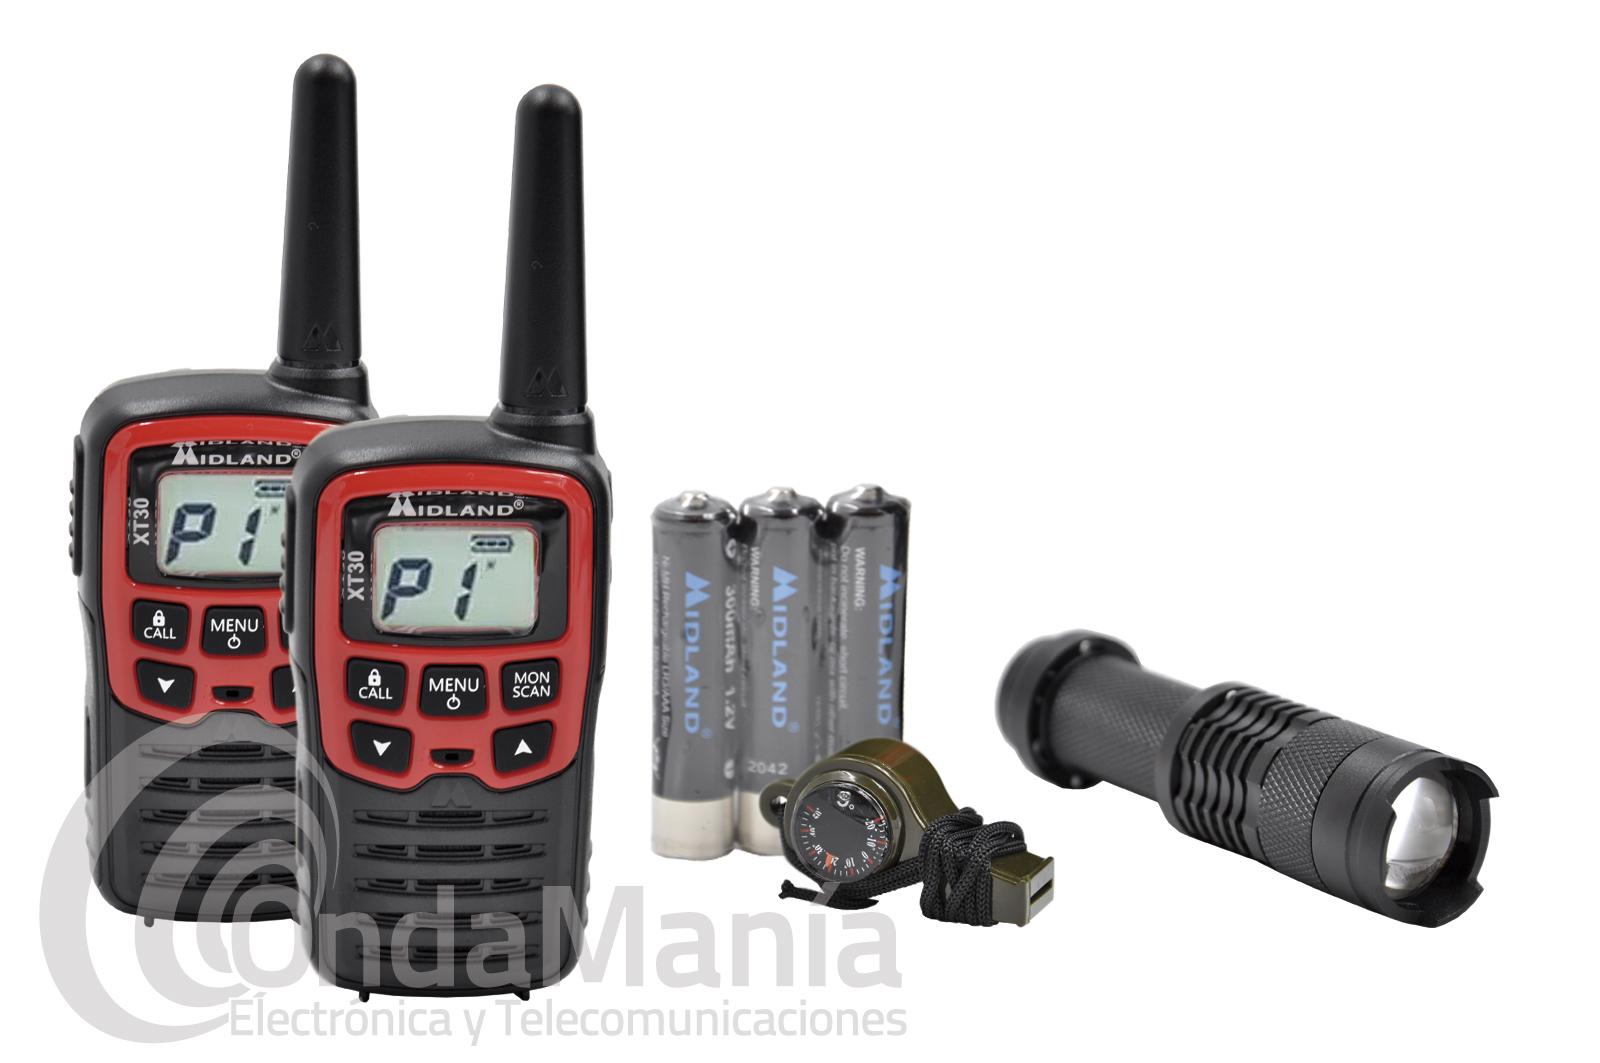 Del Sur Esmerado esqueleto MIDLAND EK30 kit de emergencia compuesto por 2 walkie talkies Midland  XT-30+SILBATO CON BRUJULA+LINTERNA